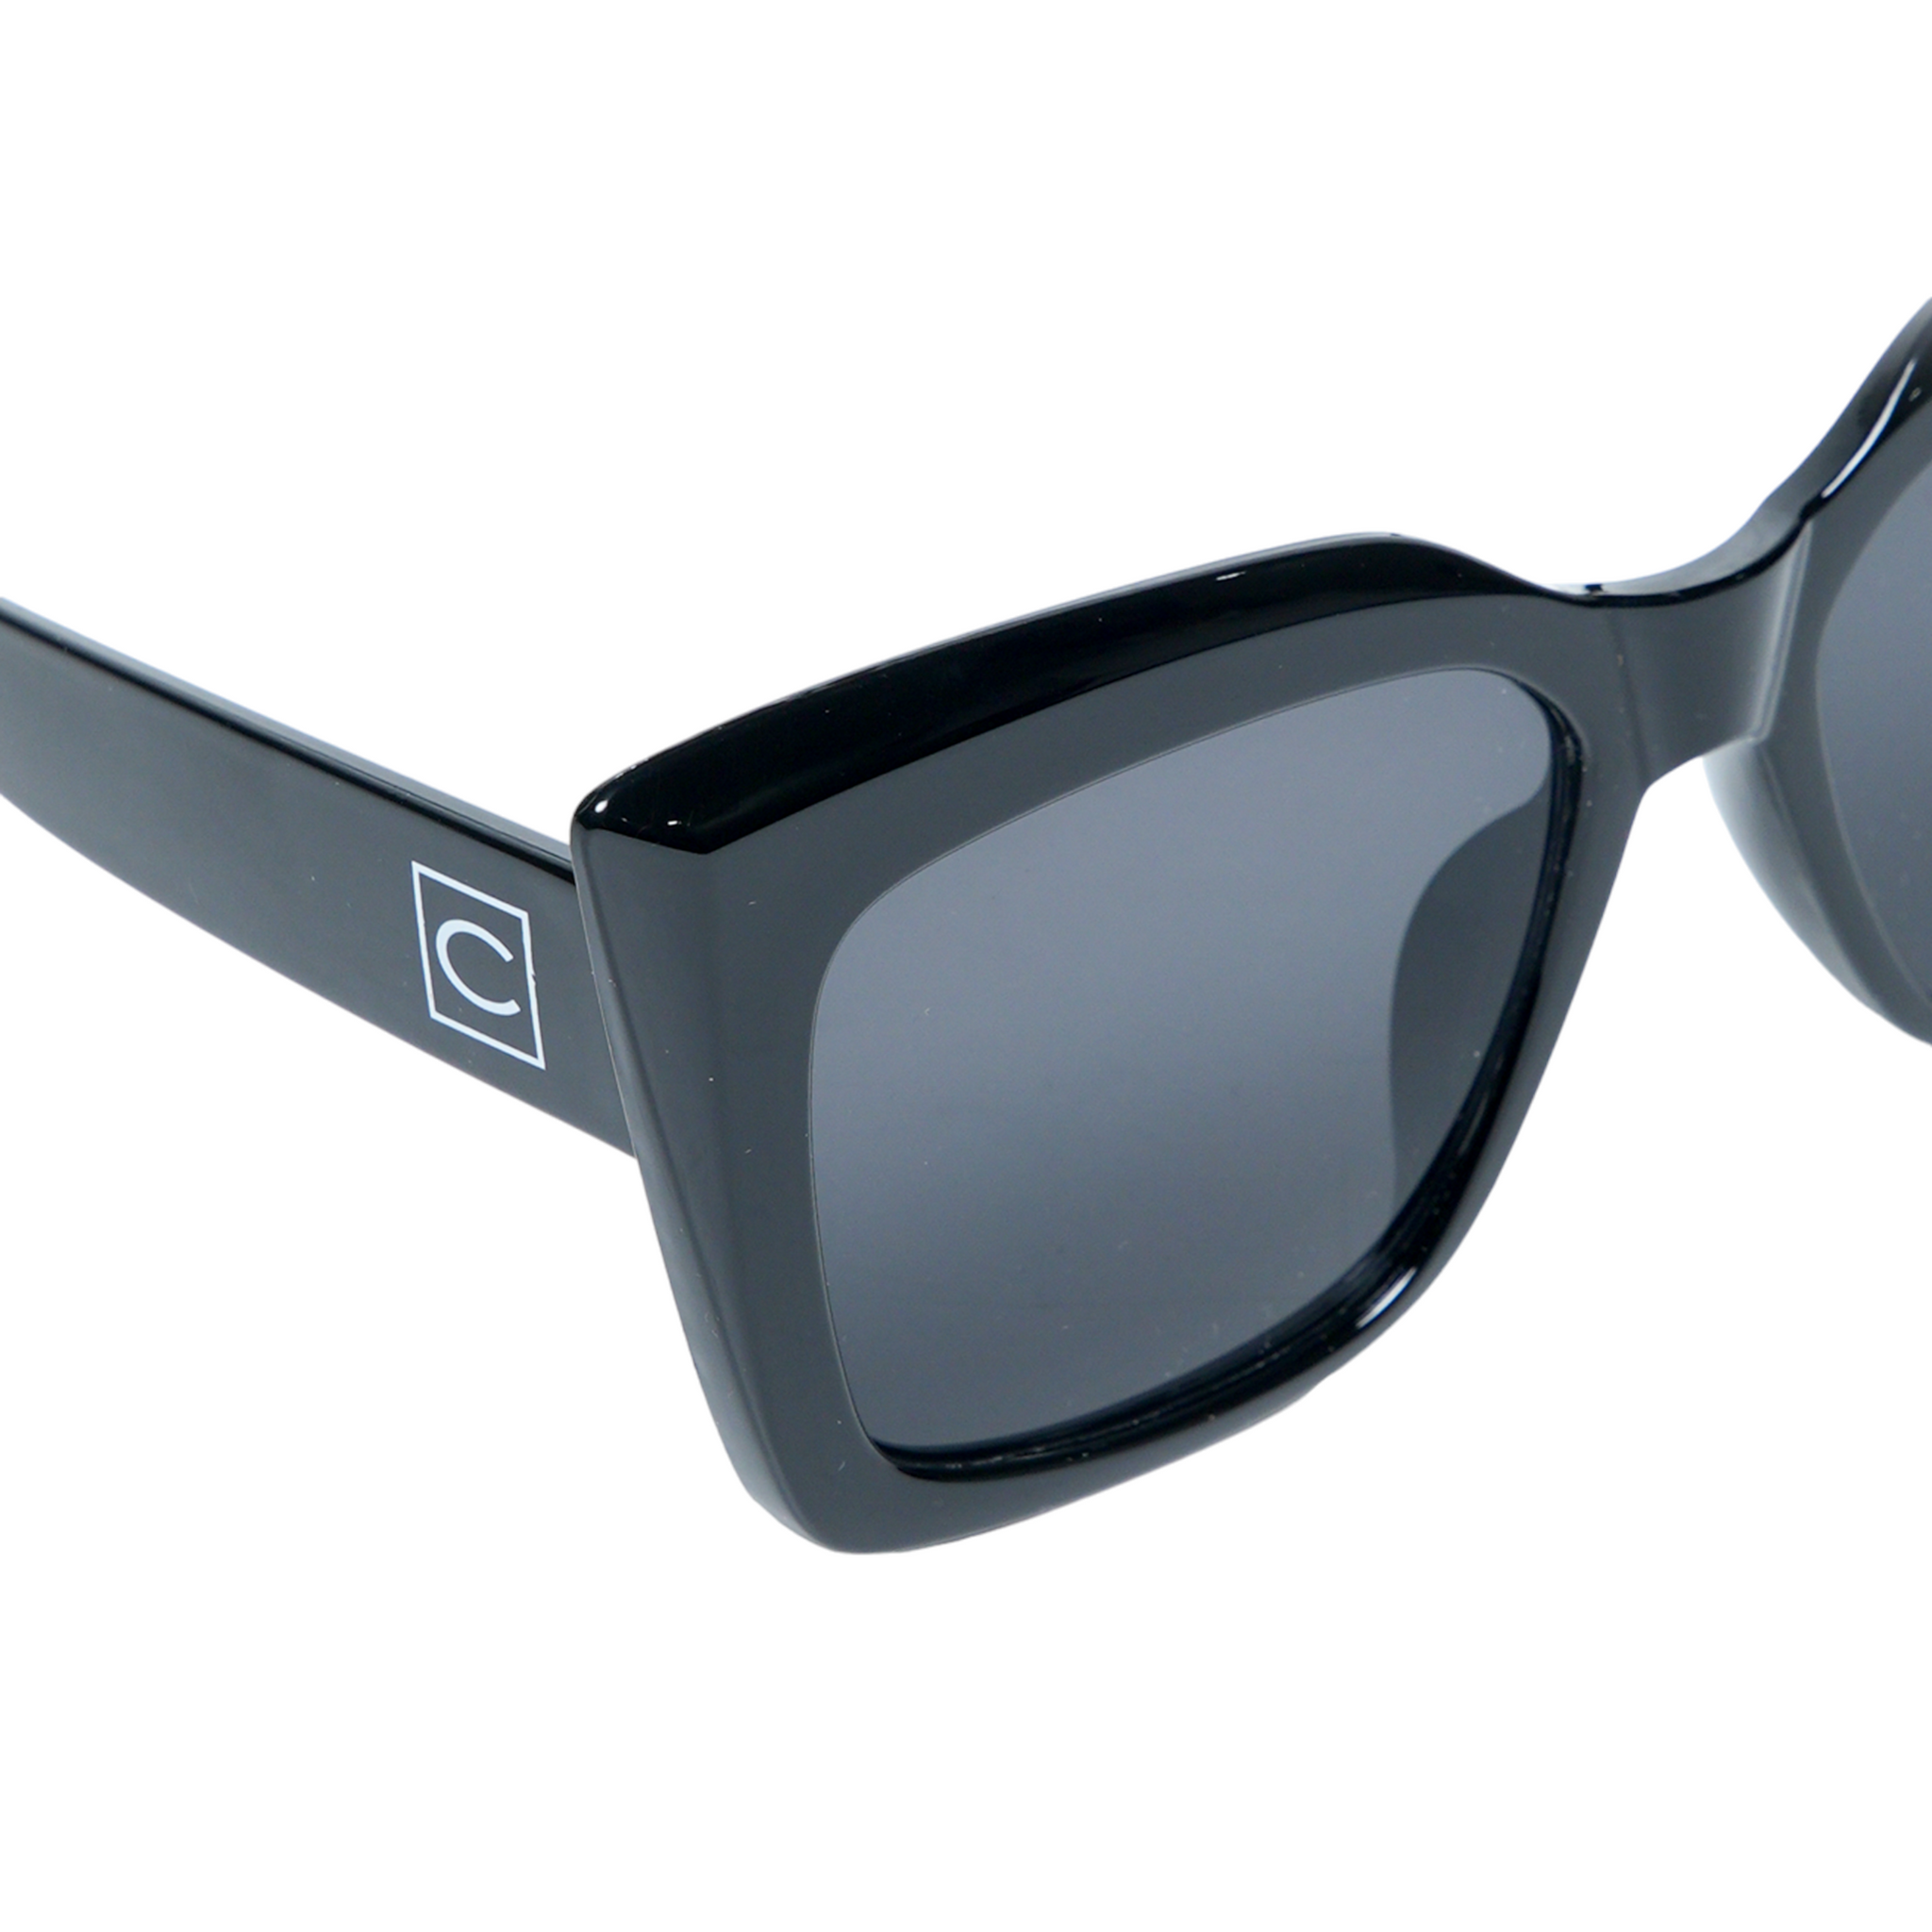 Chokore Oversized Cat-eye Sunglasses (Black)